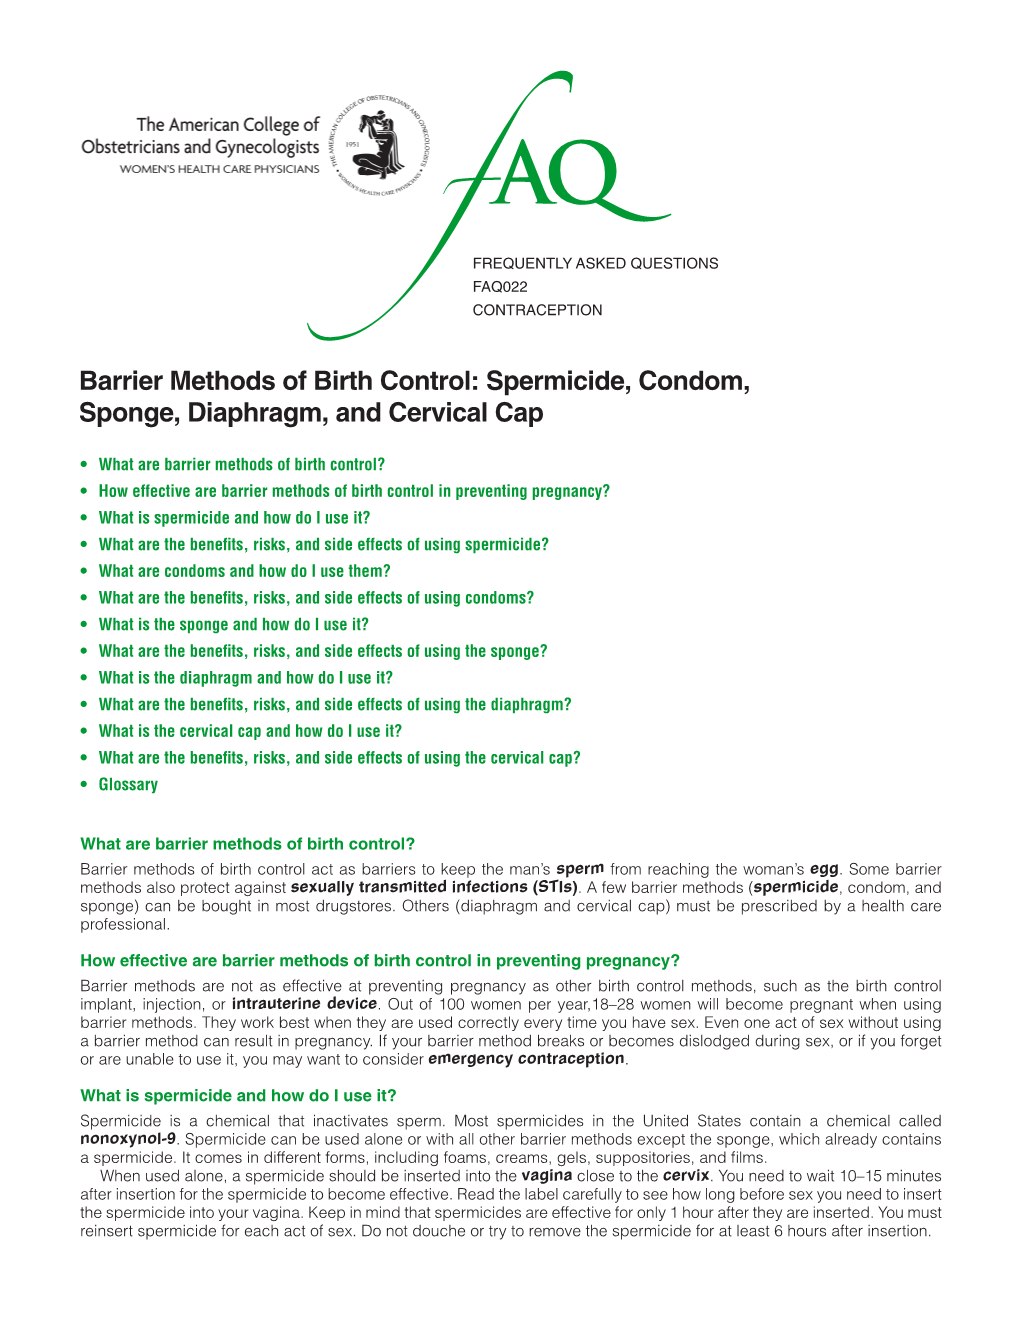 FAQ022 -- Barrier Methods of Birth Control